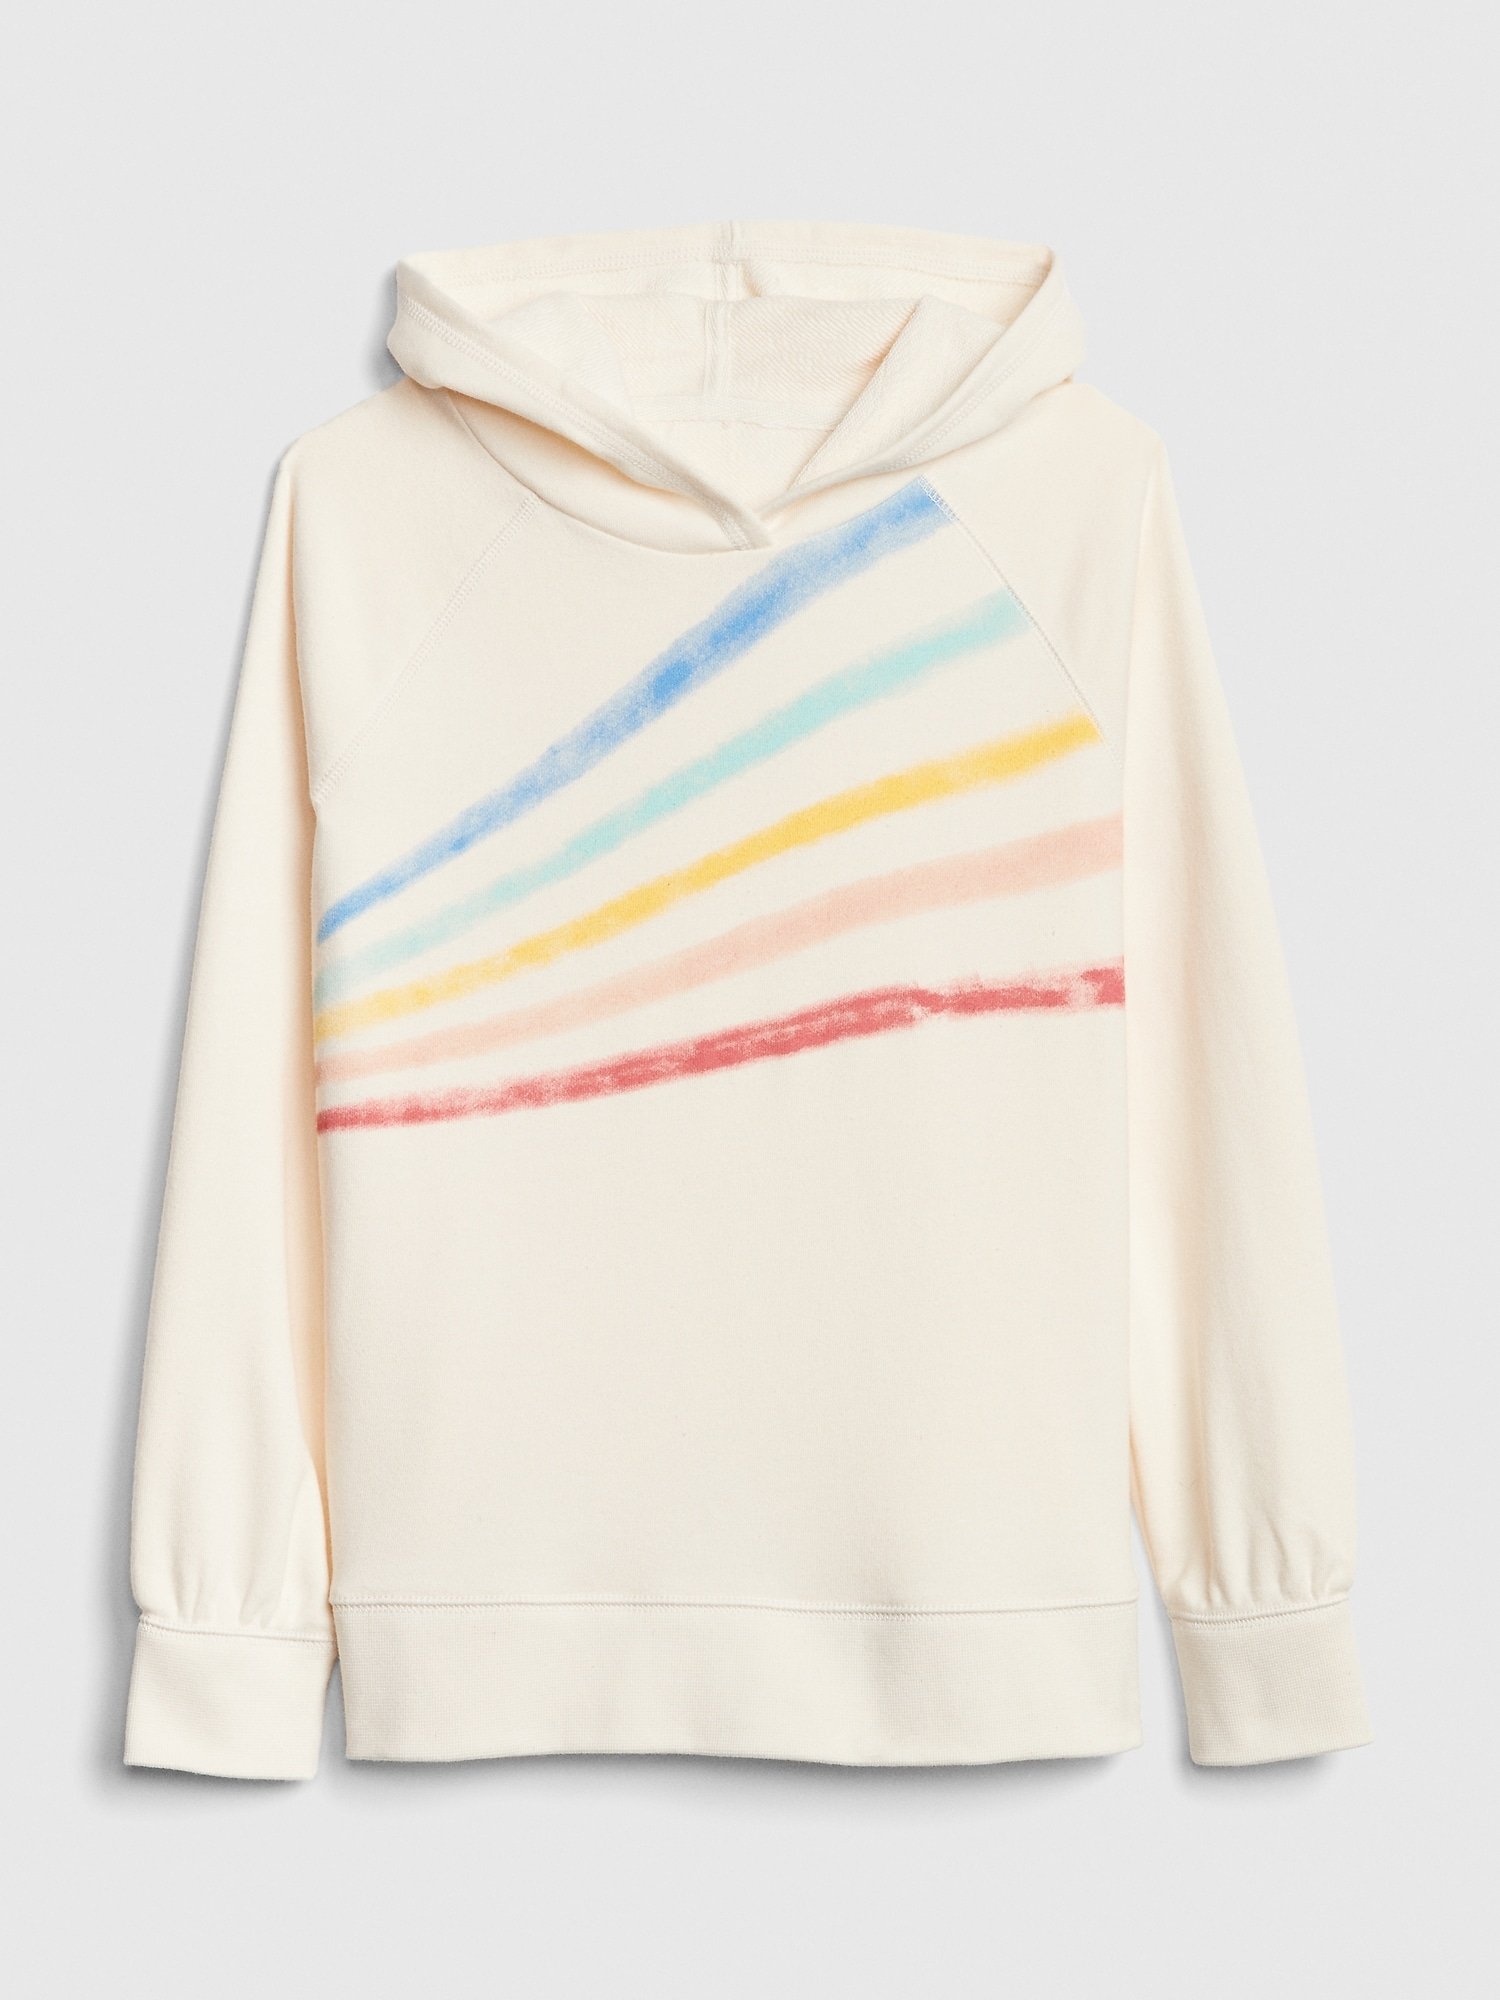 Gökkuşağı Renkli Kapüşonlu Sweatshirt product image